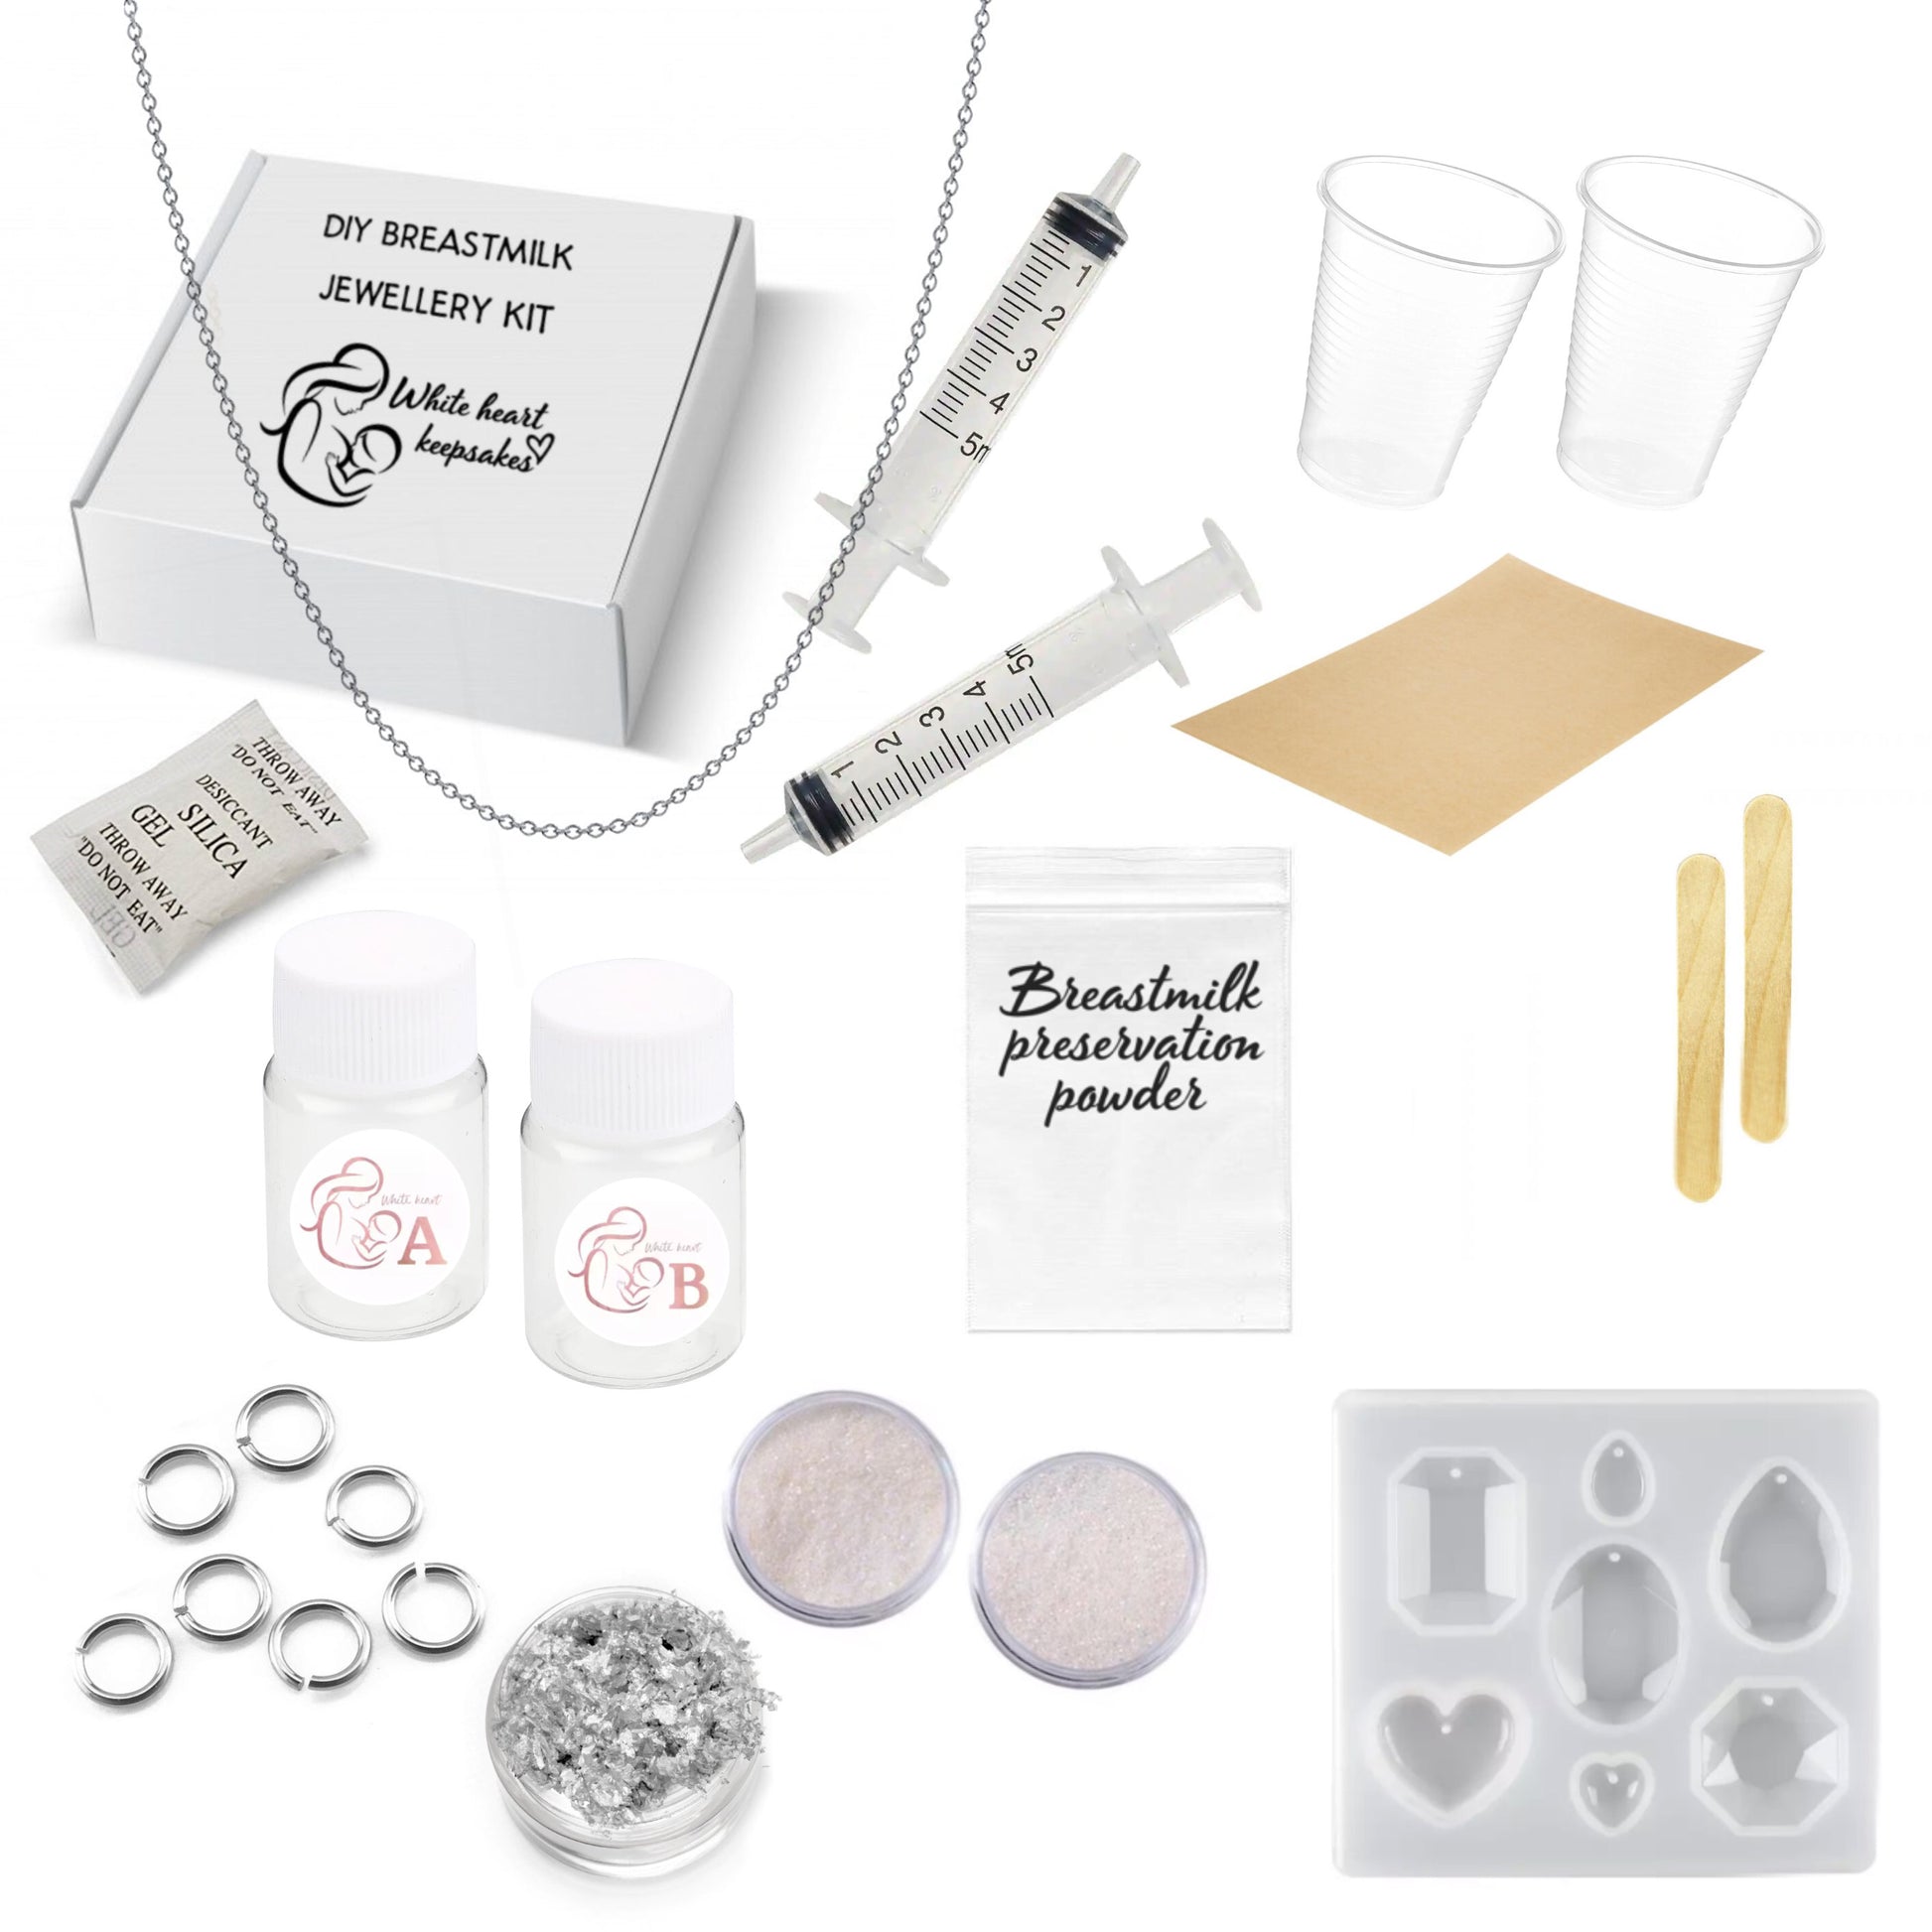 Happyimprints Breast Milk Jewellery Kit,Easy to Make@Home 